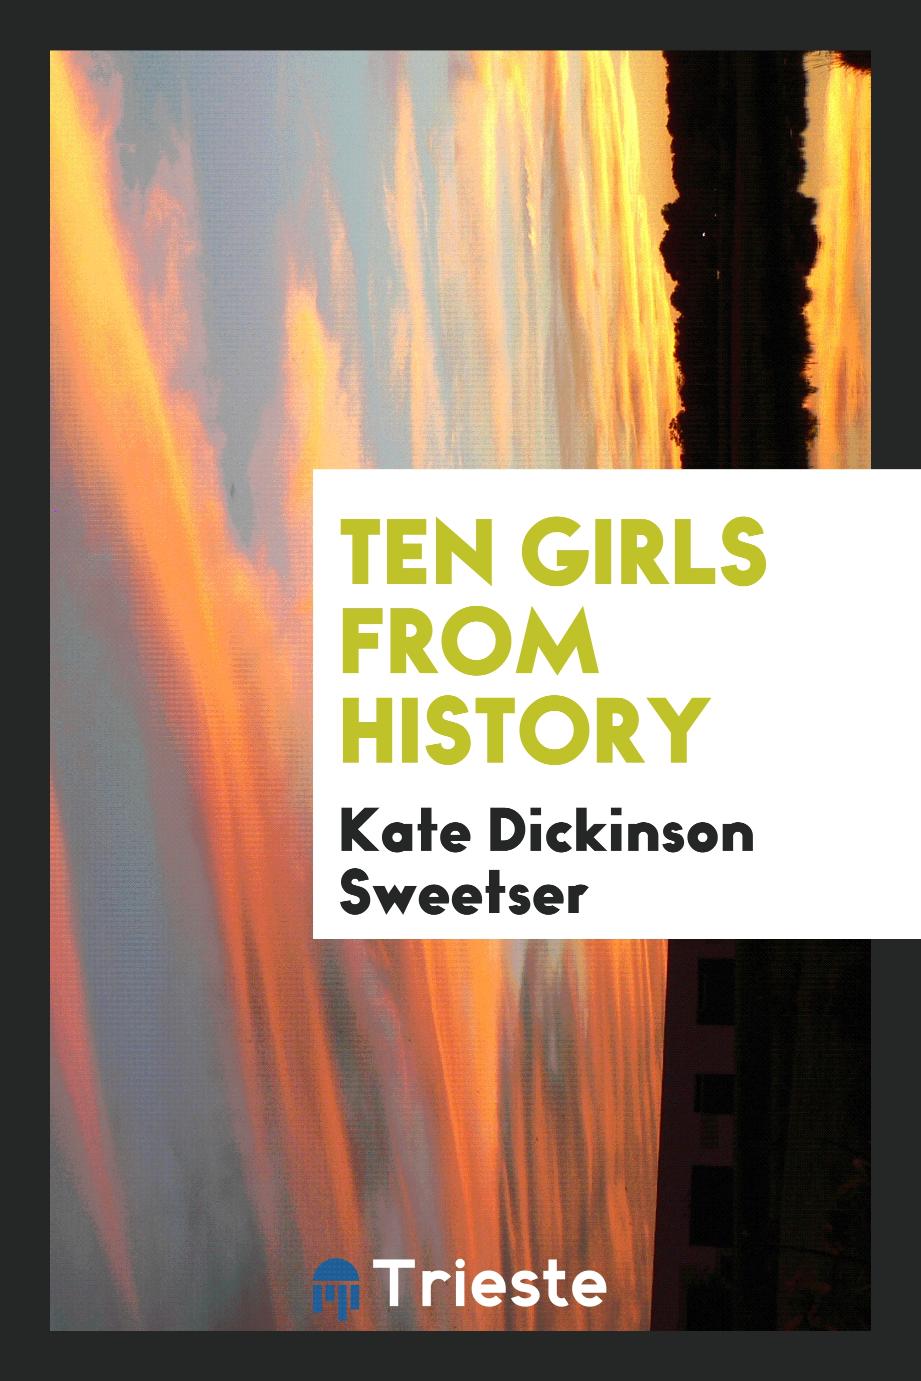 Ten girls from history